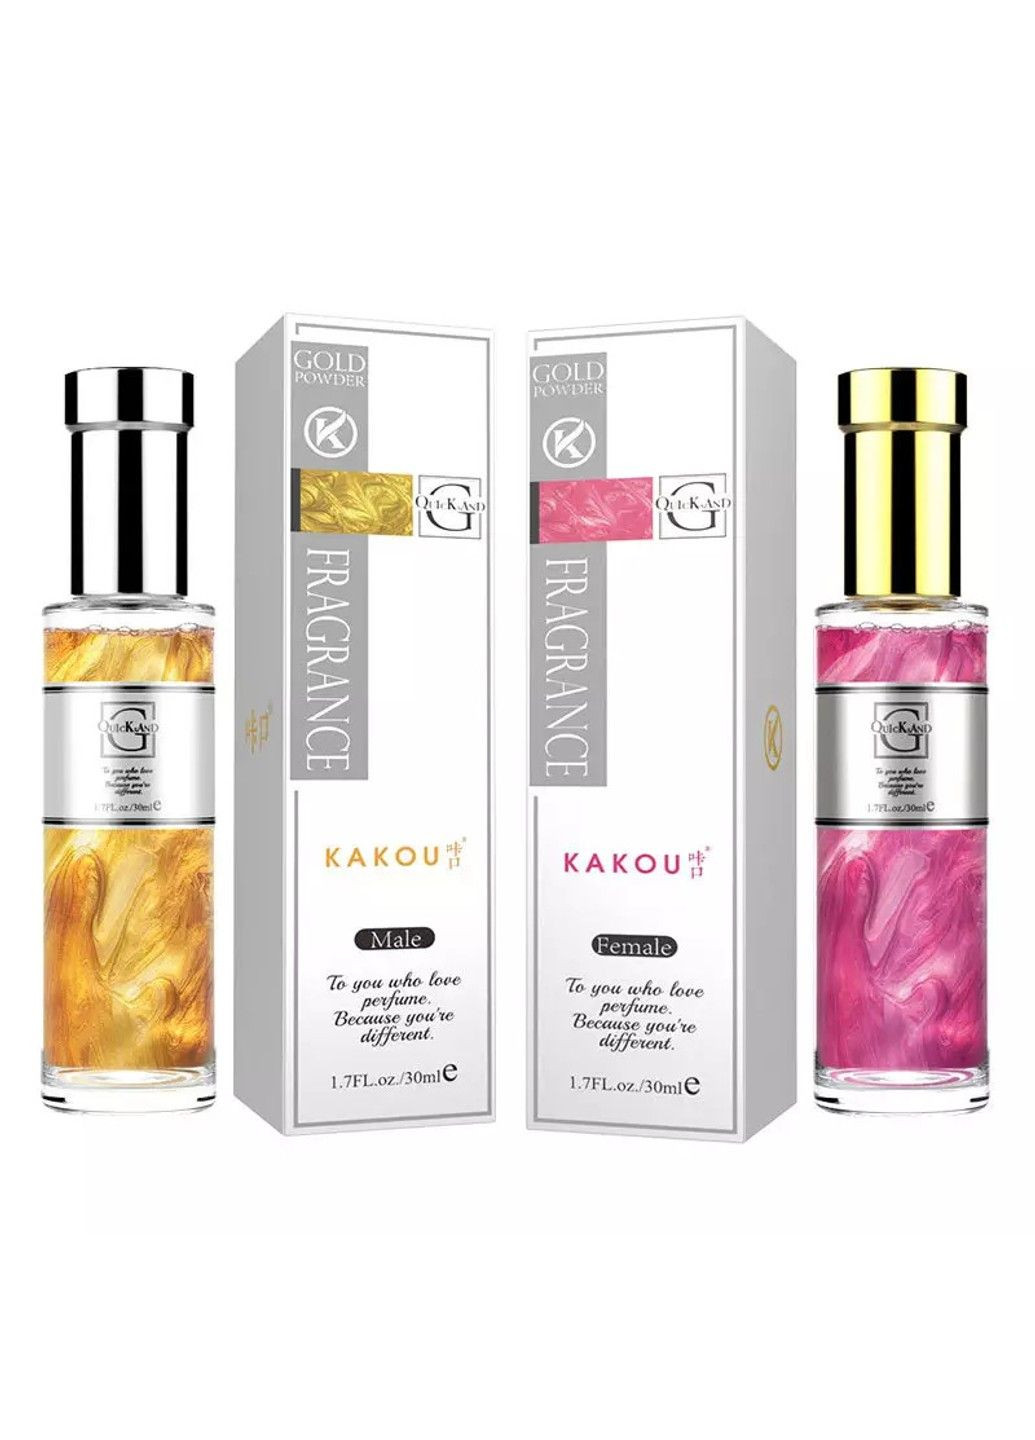 Феромоновый мужской парфюм KAKOU 30 ml. MOAI (284279154)